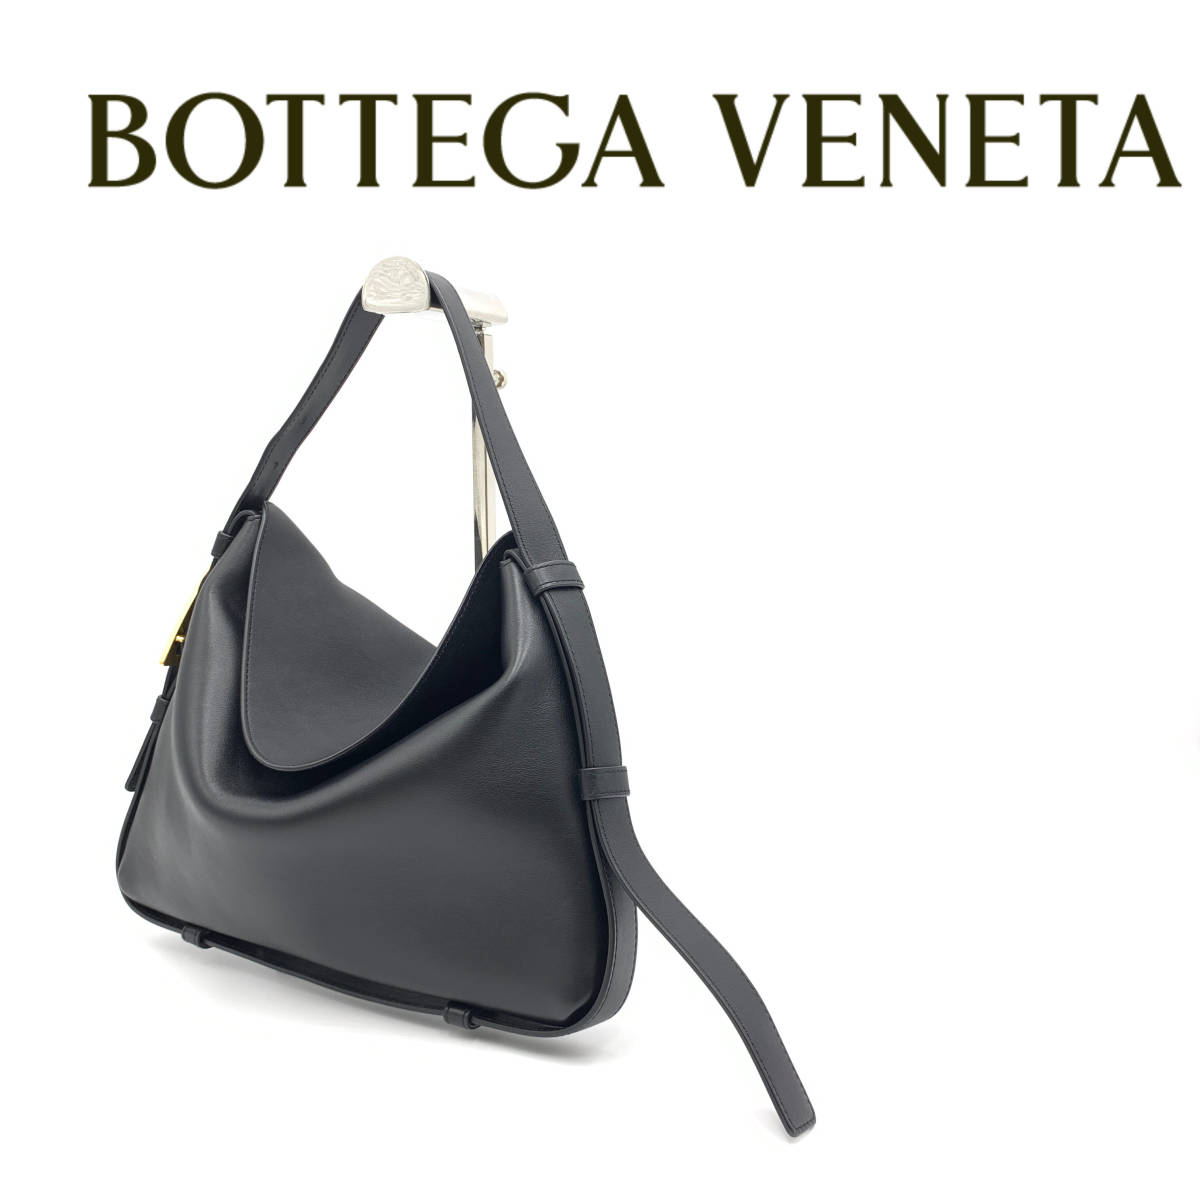 Bottega Veneta CRADLE ボッテガ ヴェネタ クレードル スモール